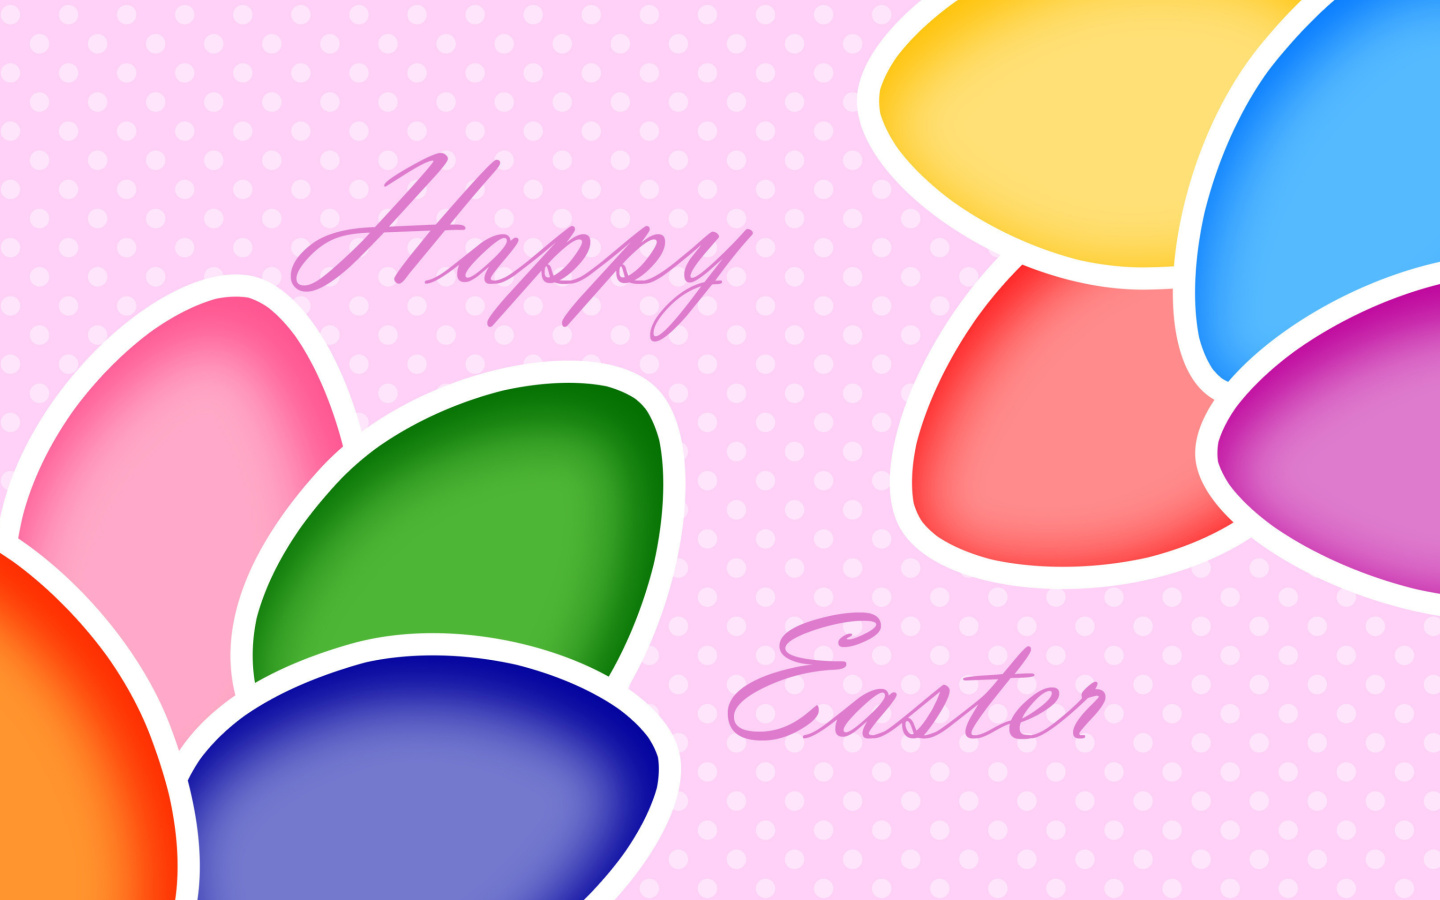 Happy Easter wallpaper 1440x900